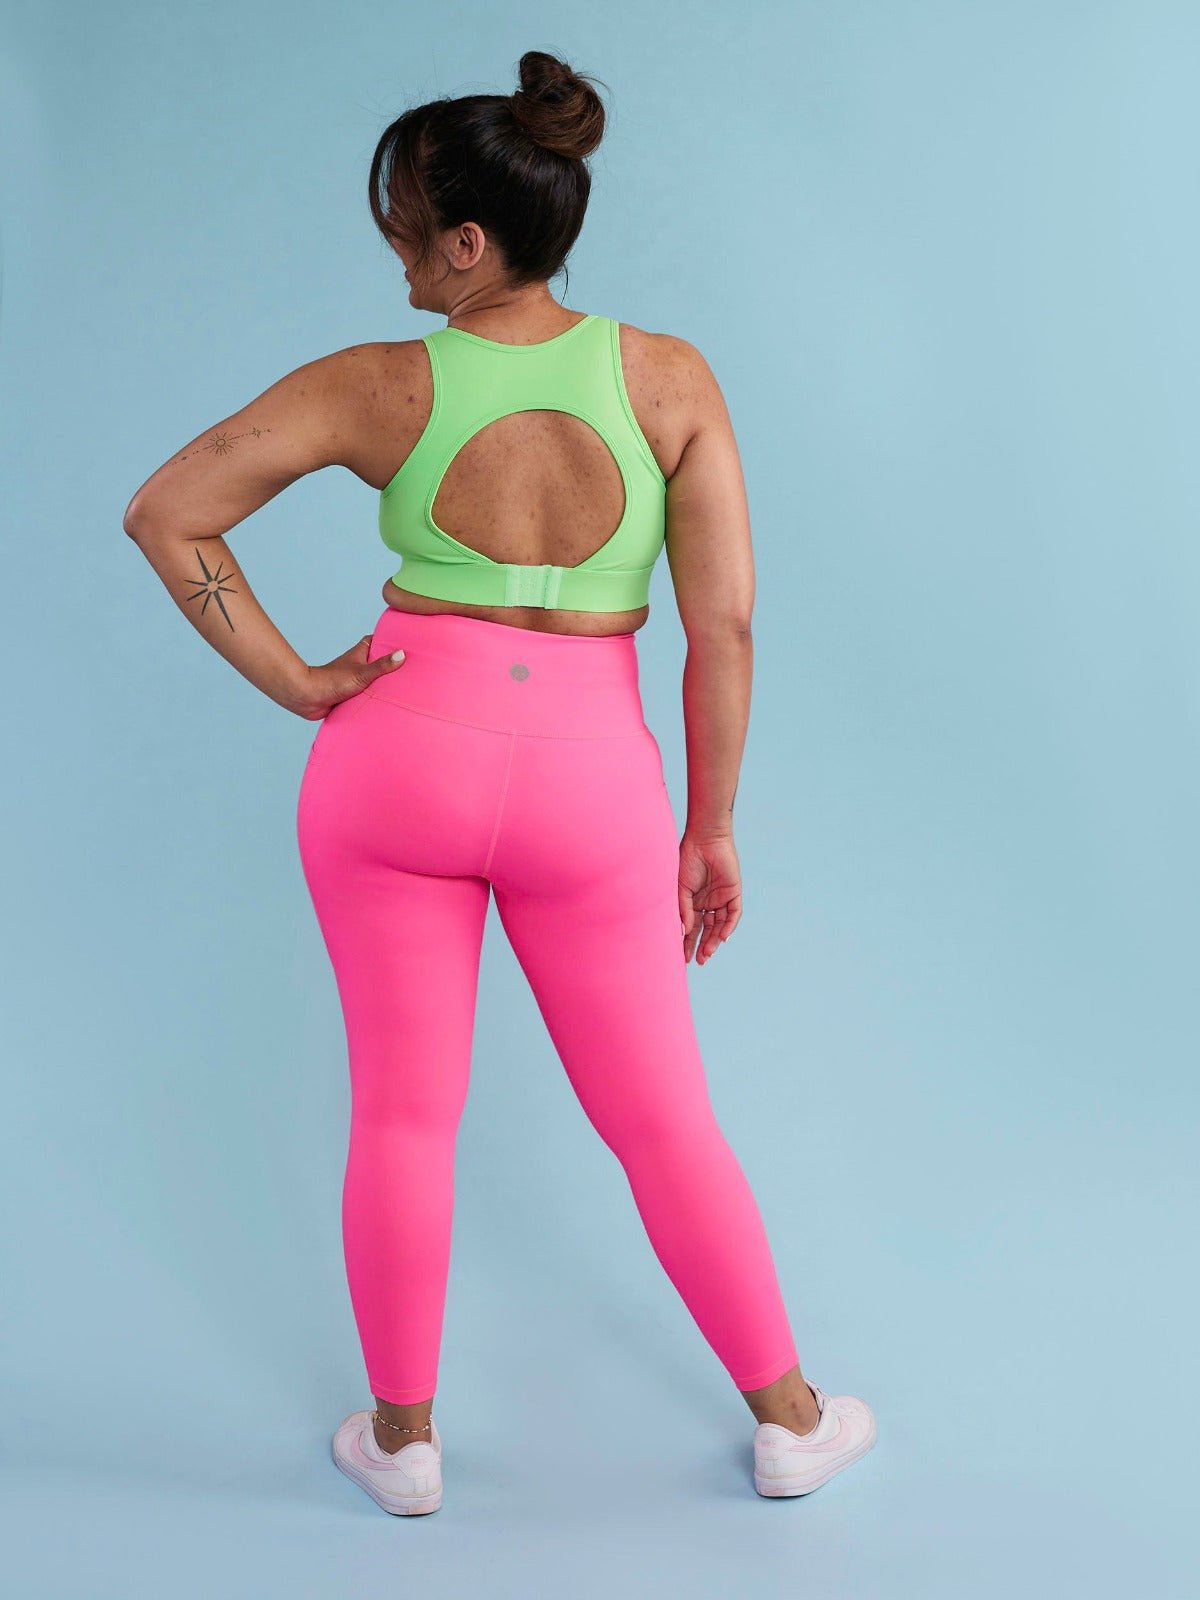 Neon Pink Everyday Legging - 7/8 length - squat proof gym leggings petite women